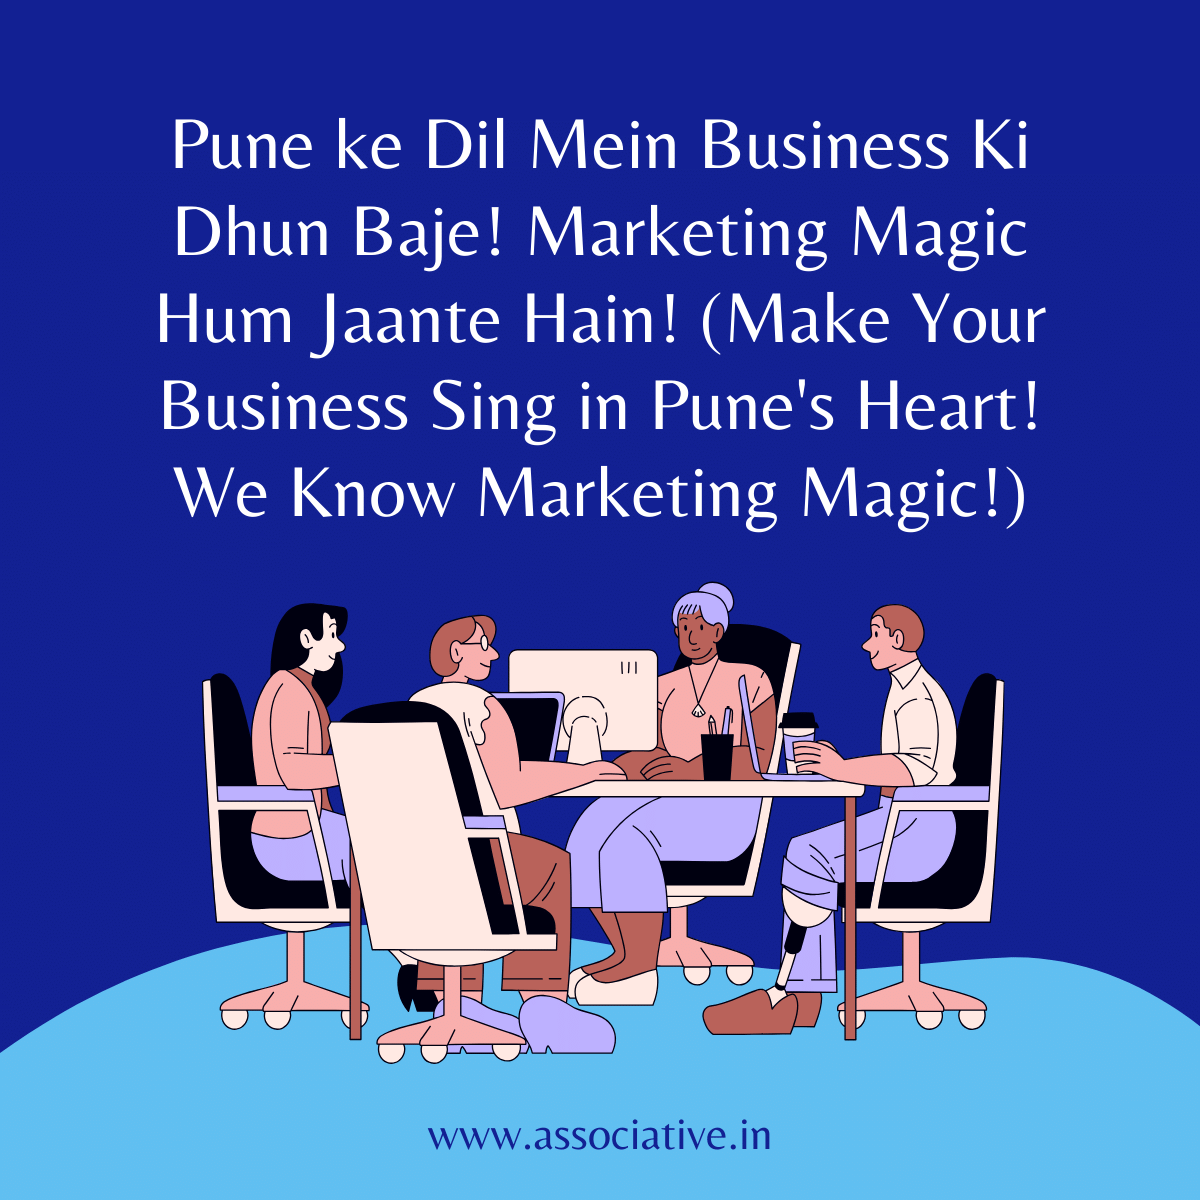 Pune ke Dil Mein Business Ki Dhun Baje! Marketing Magic Hum Jaante Hain! (Make Your Business Sing in Pune's Heart! We Know Marketing Magic!)